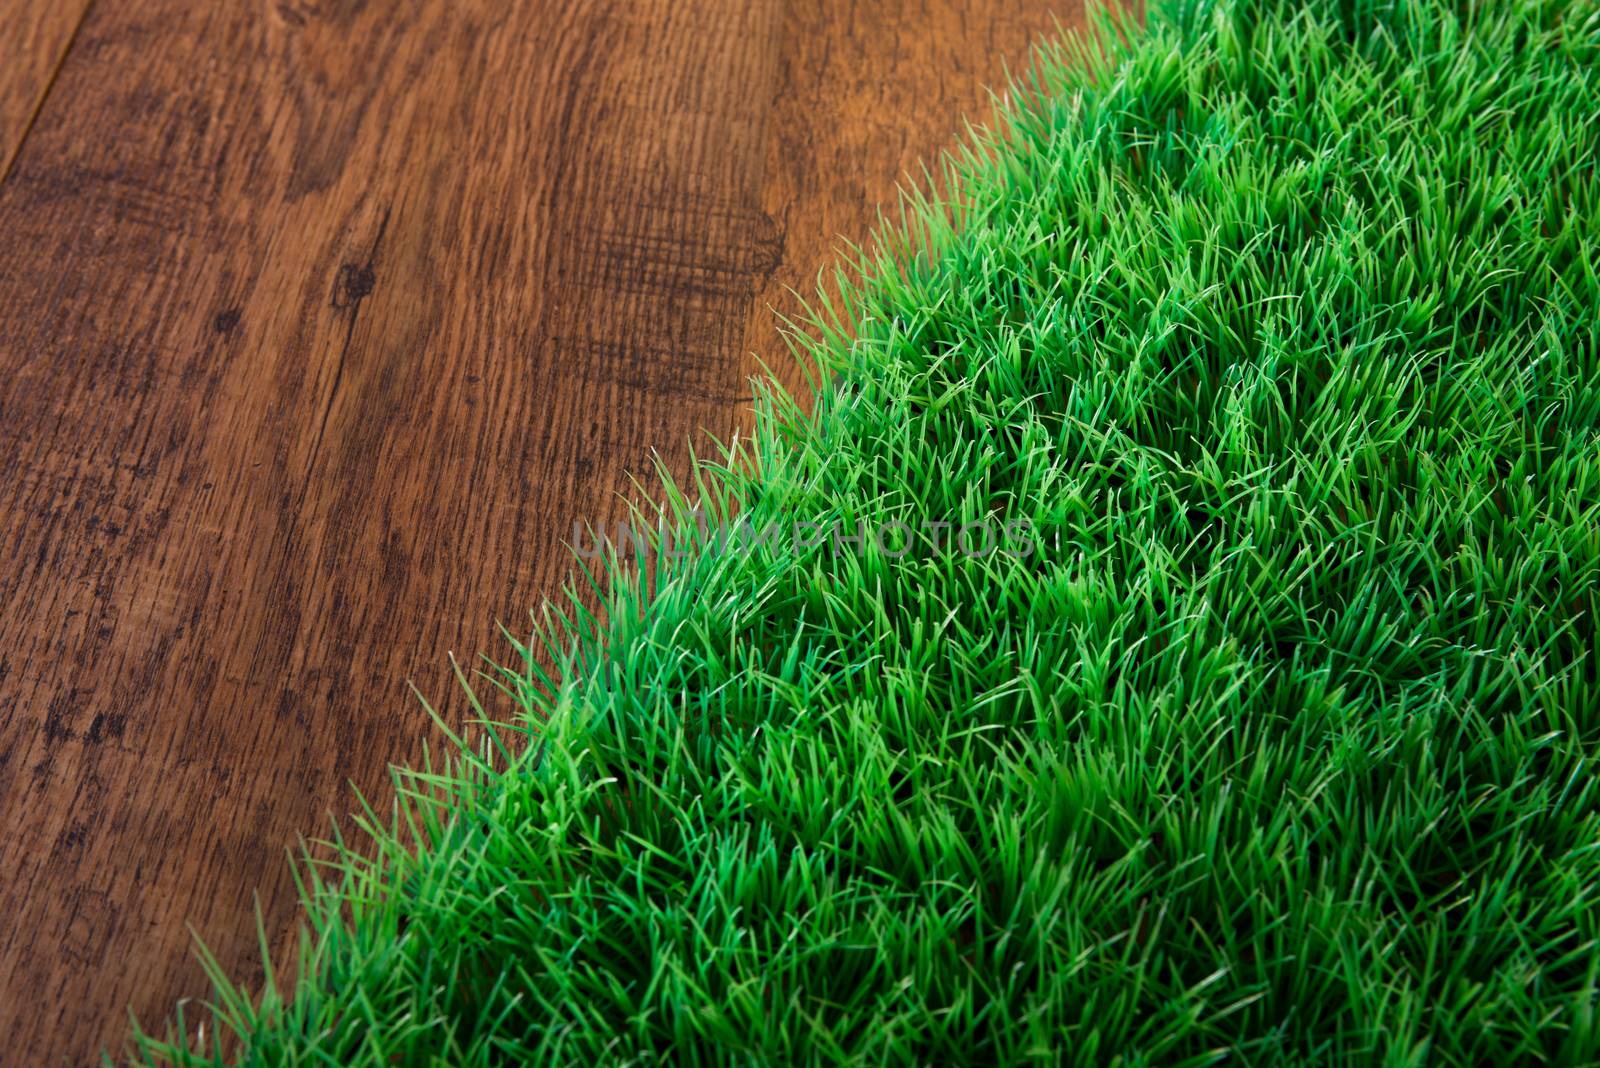 Artificial lush grass close-up on wooden hardwood floor.